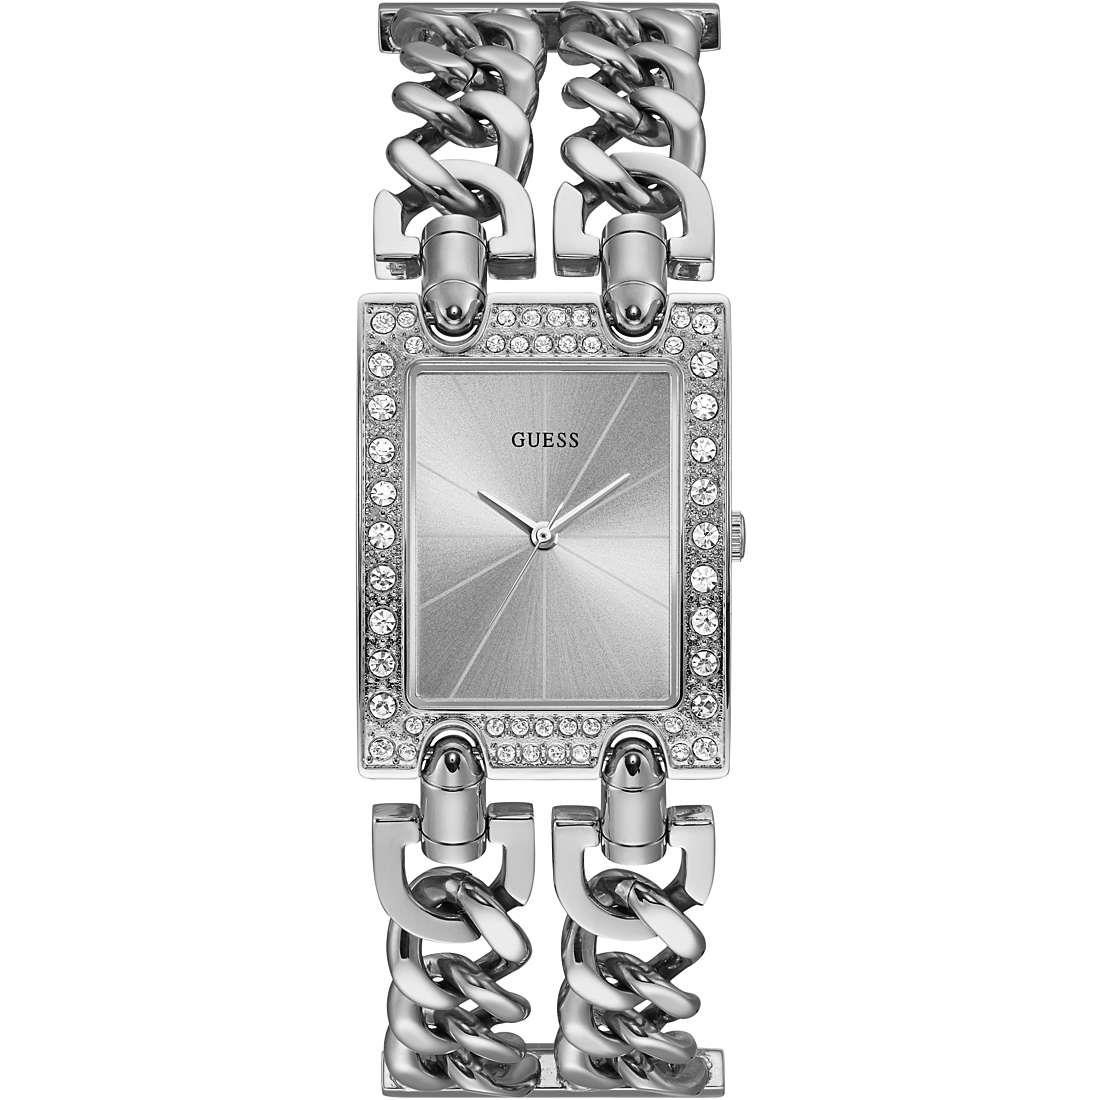 Women's watch in steel, square case - GUESS